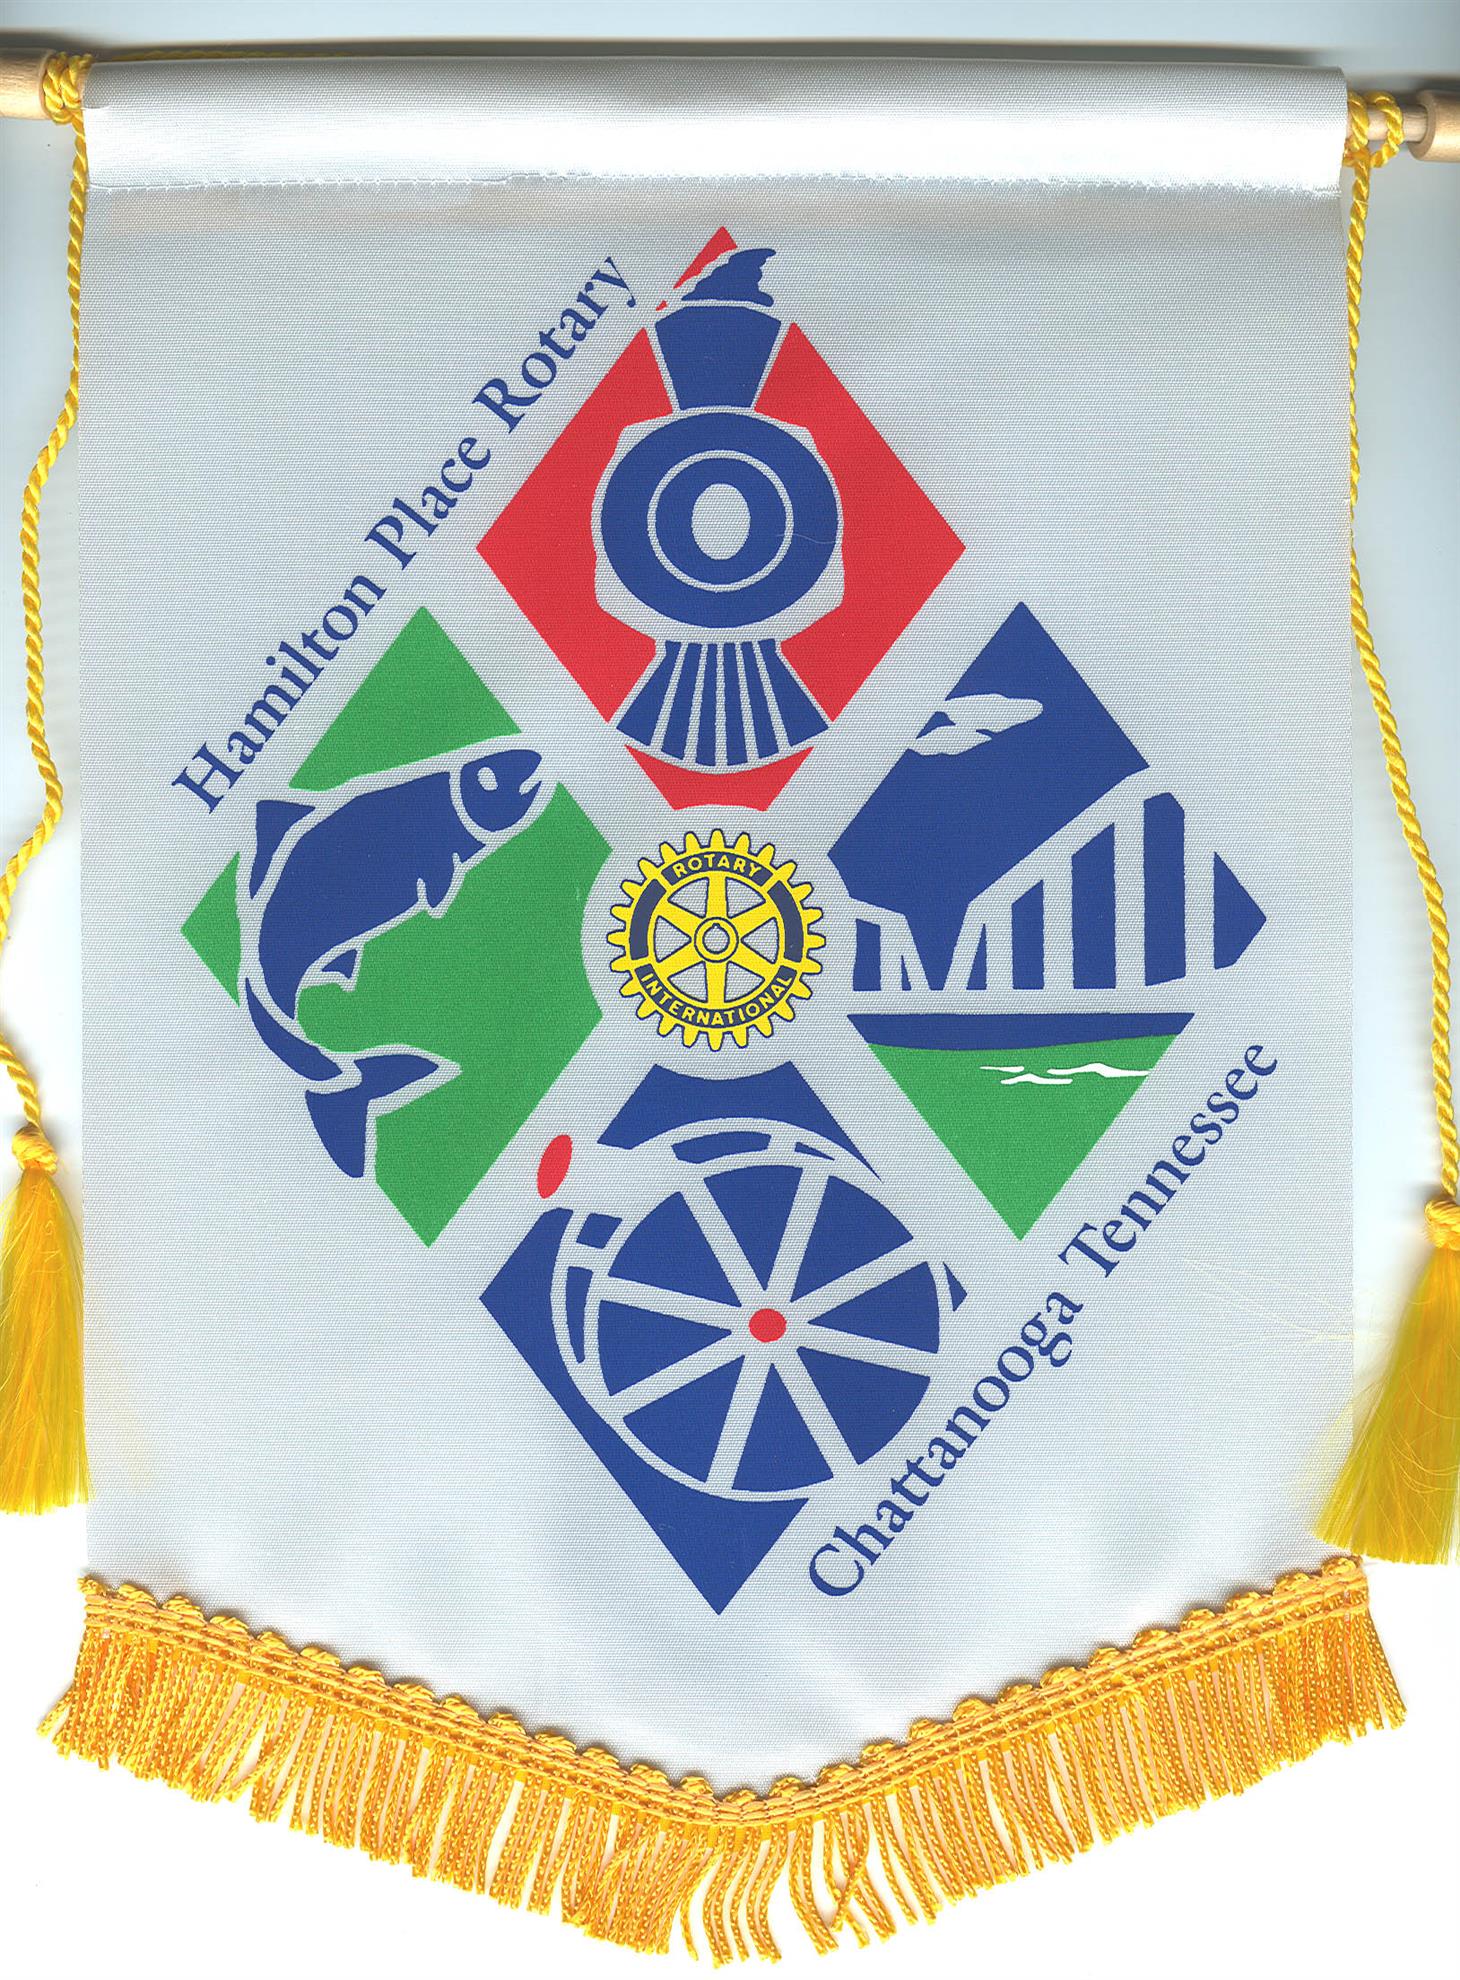 Rotary Club of Chattanooga Hamilton Place (Copy)